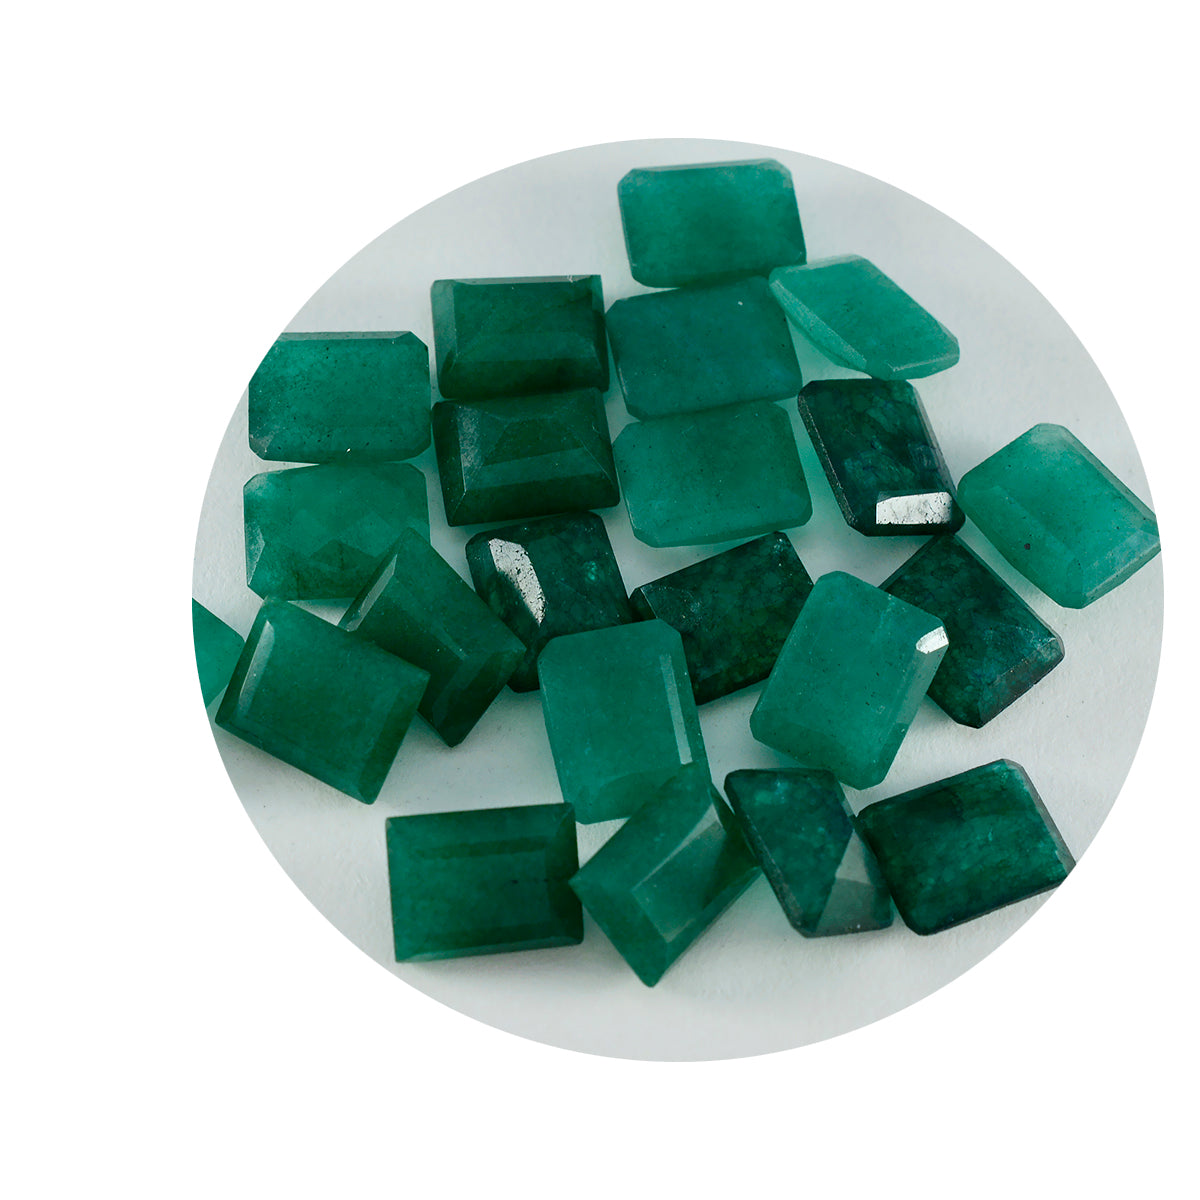 Riyogems 1PC echte groene jaspis gefacetteerd 8x10 mm achthoekige vorm fantastische kwaliteit losse edelsteen